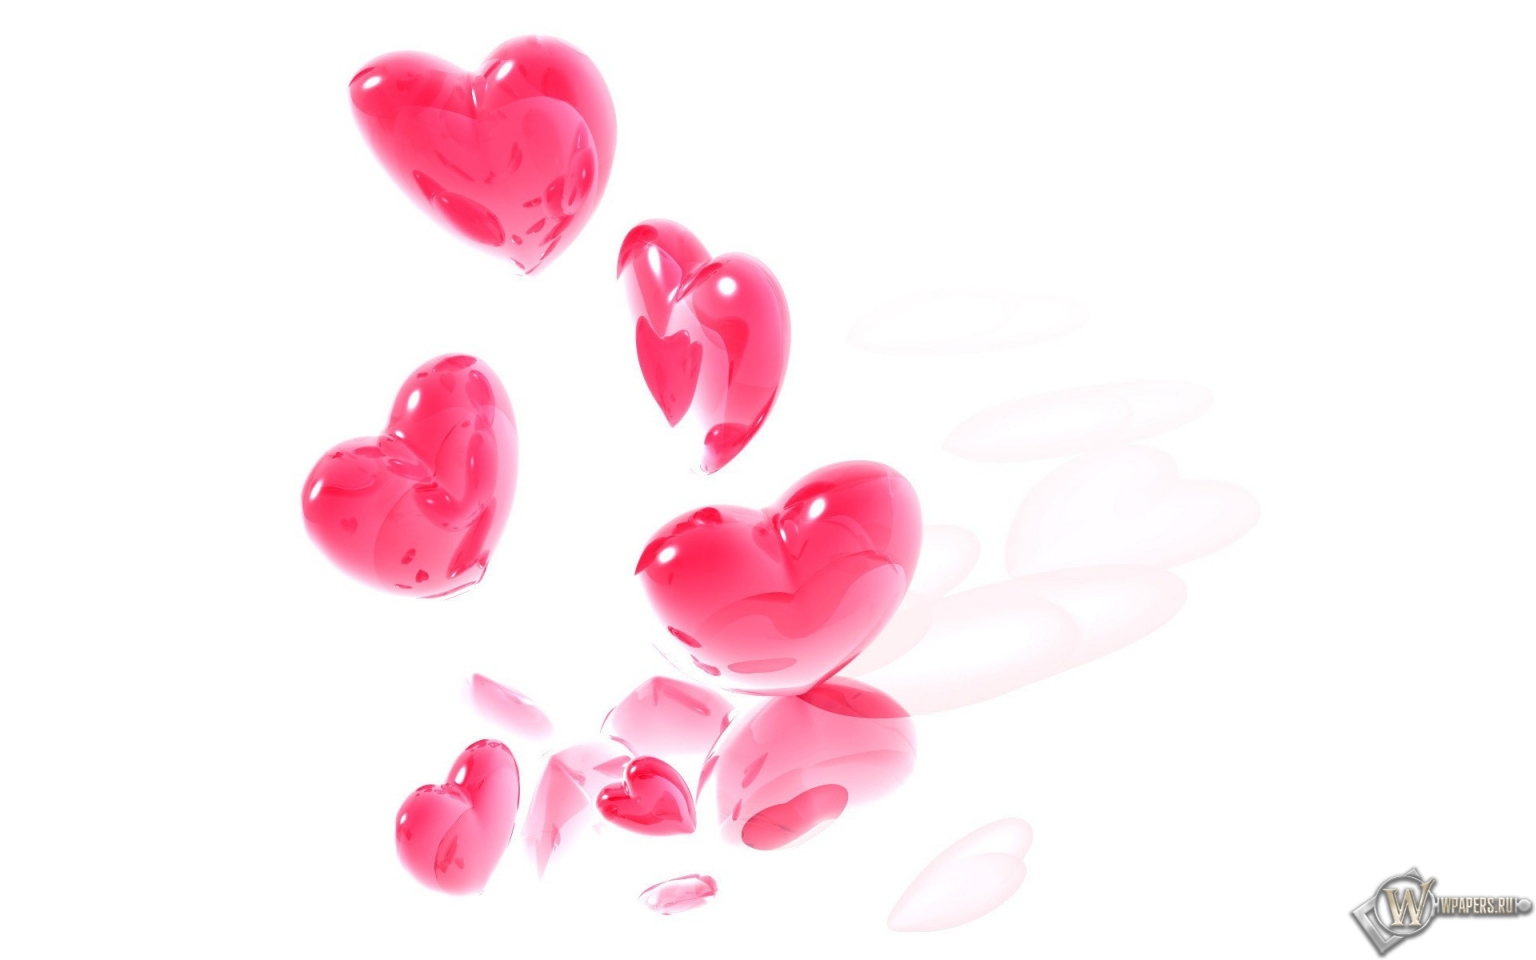 Розовые сердечки 1536x960